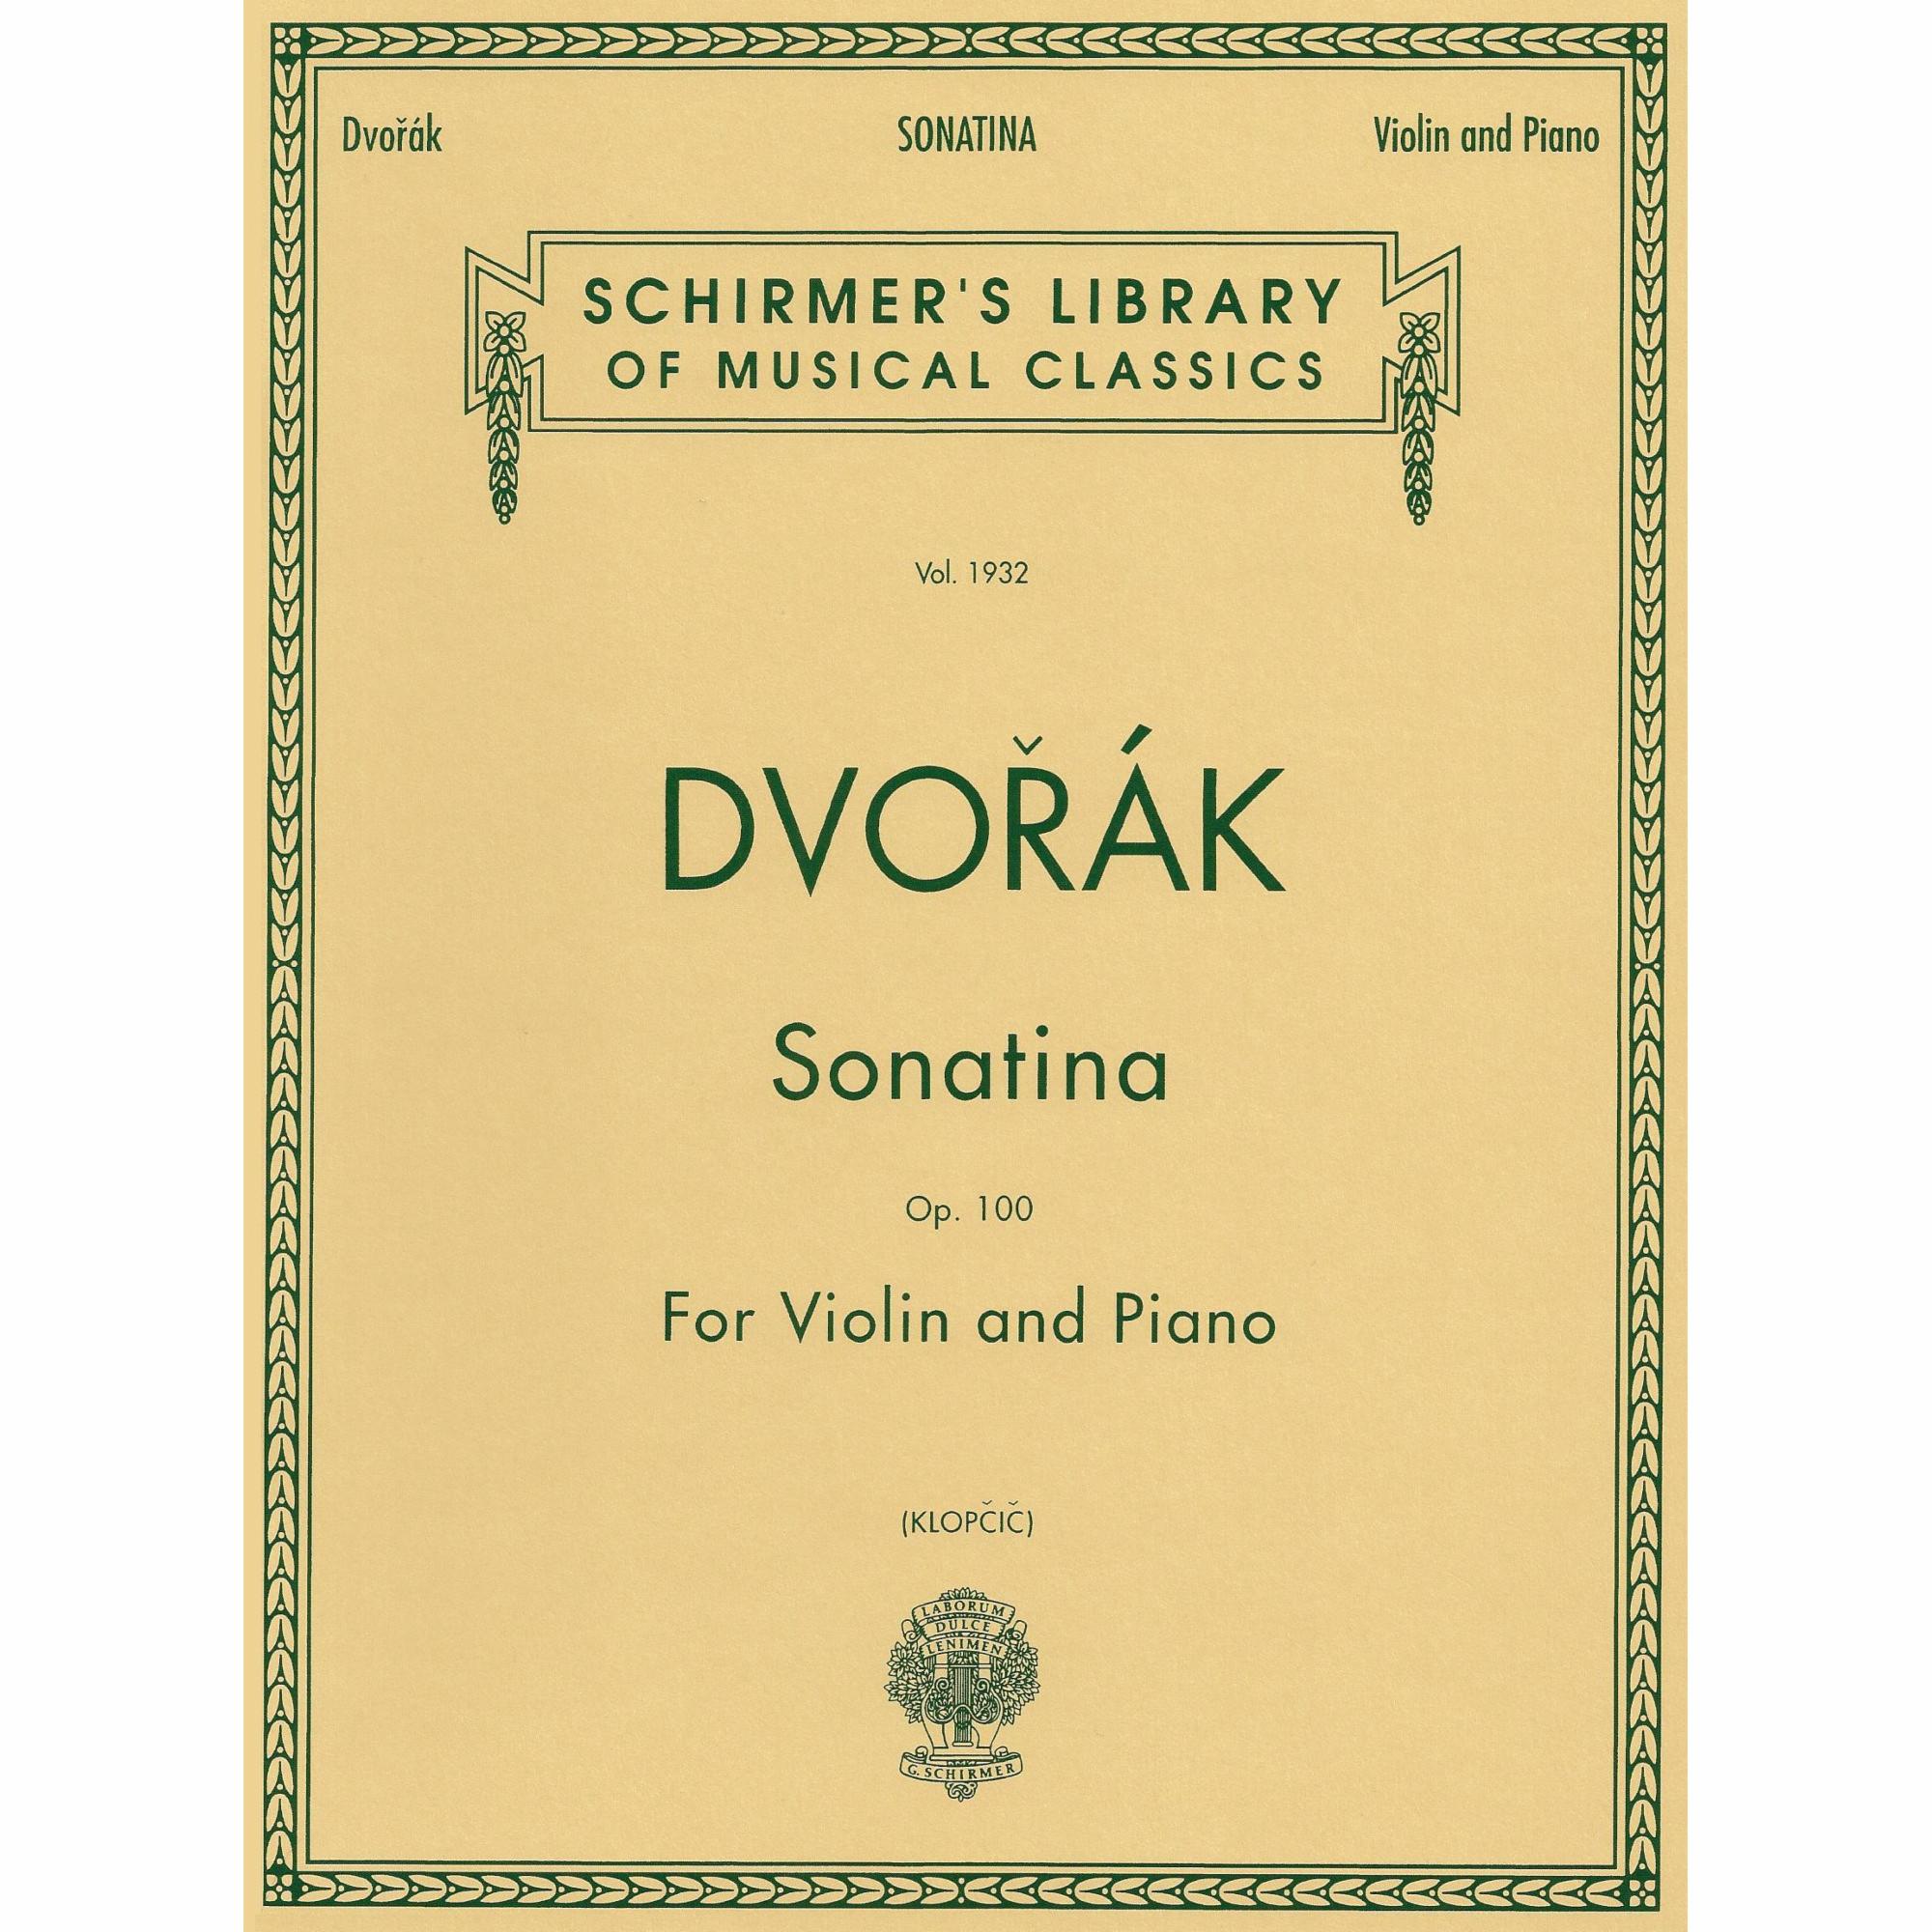 Dvorak -- Sonatina in G Major, Op. 100 for Violin and Piano